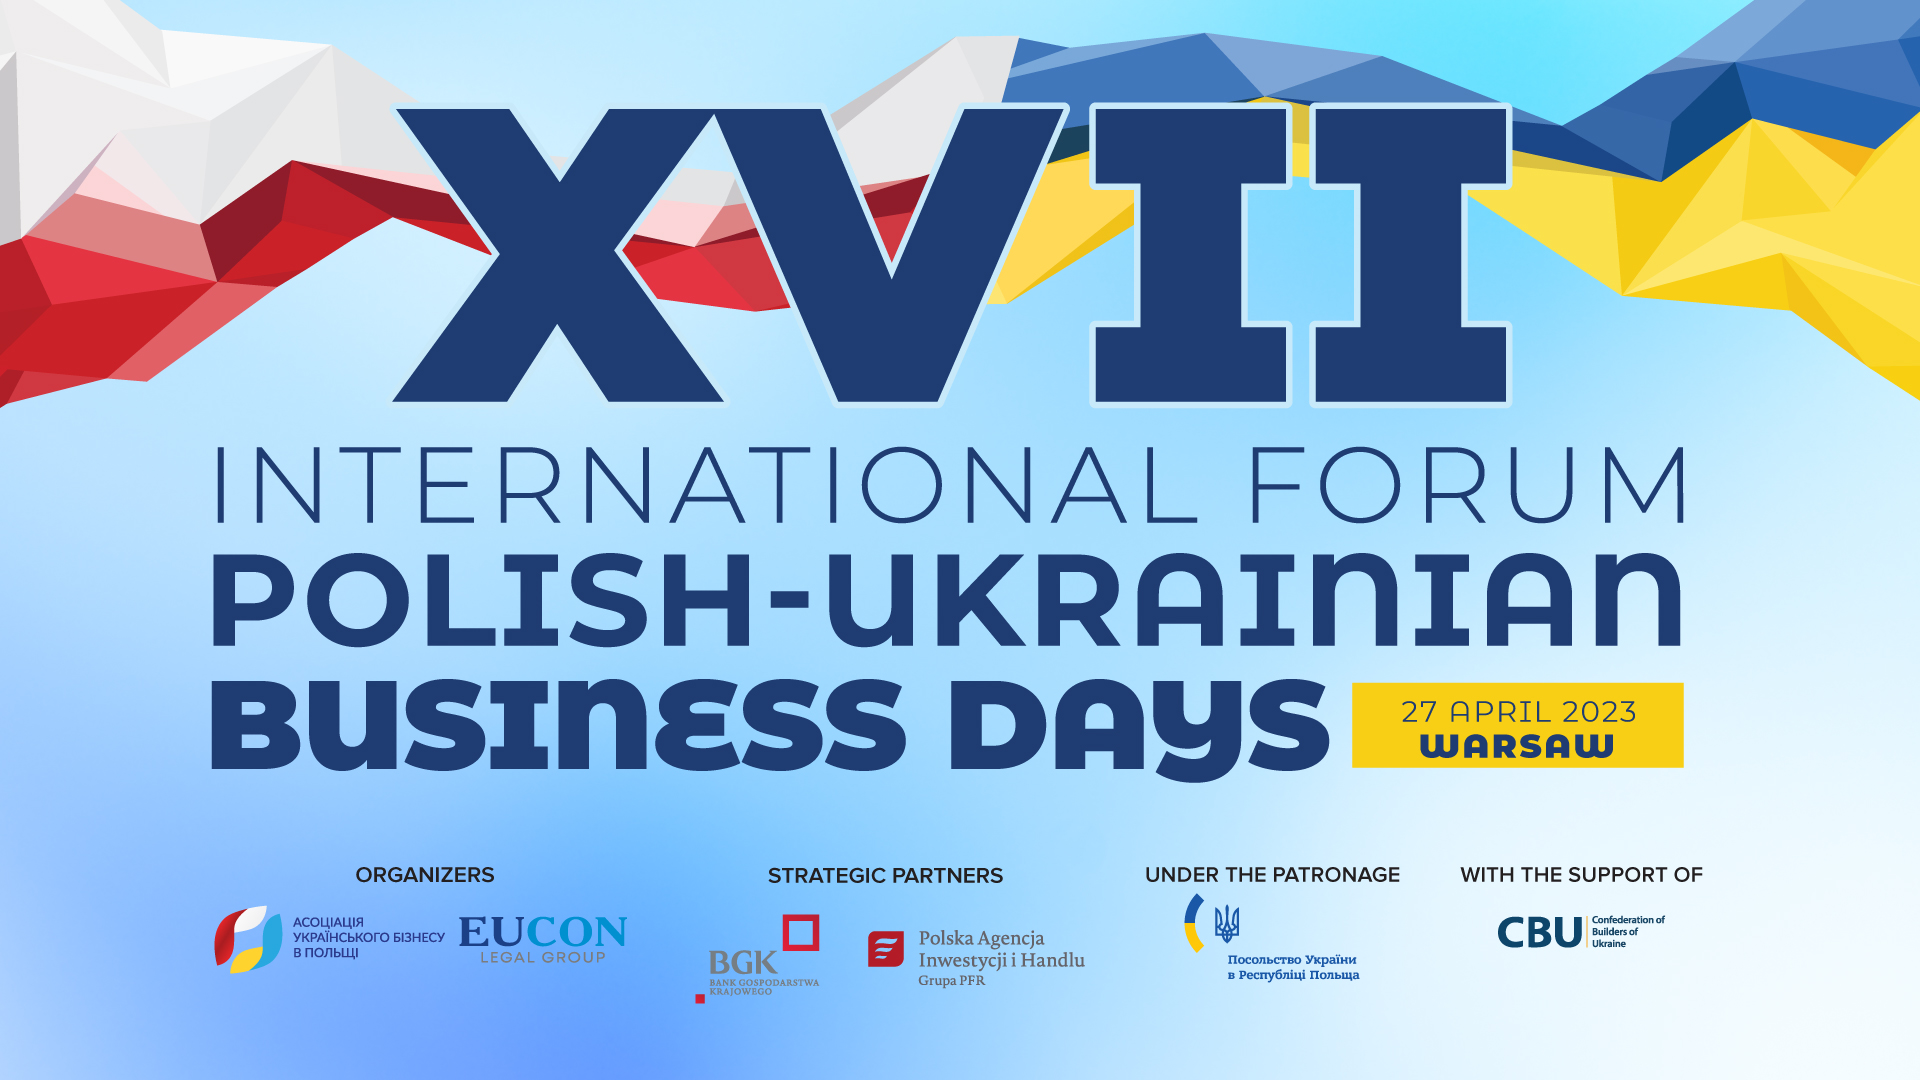 On April 27, the XVII International Forum “Polish-Ukrainian Business Days” will be held in Warsaw